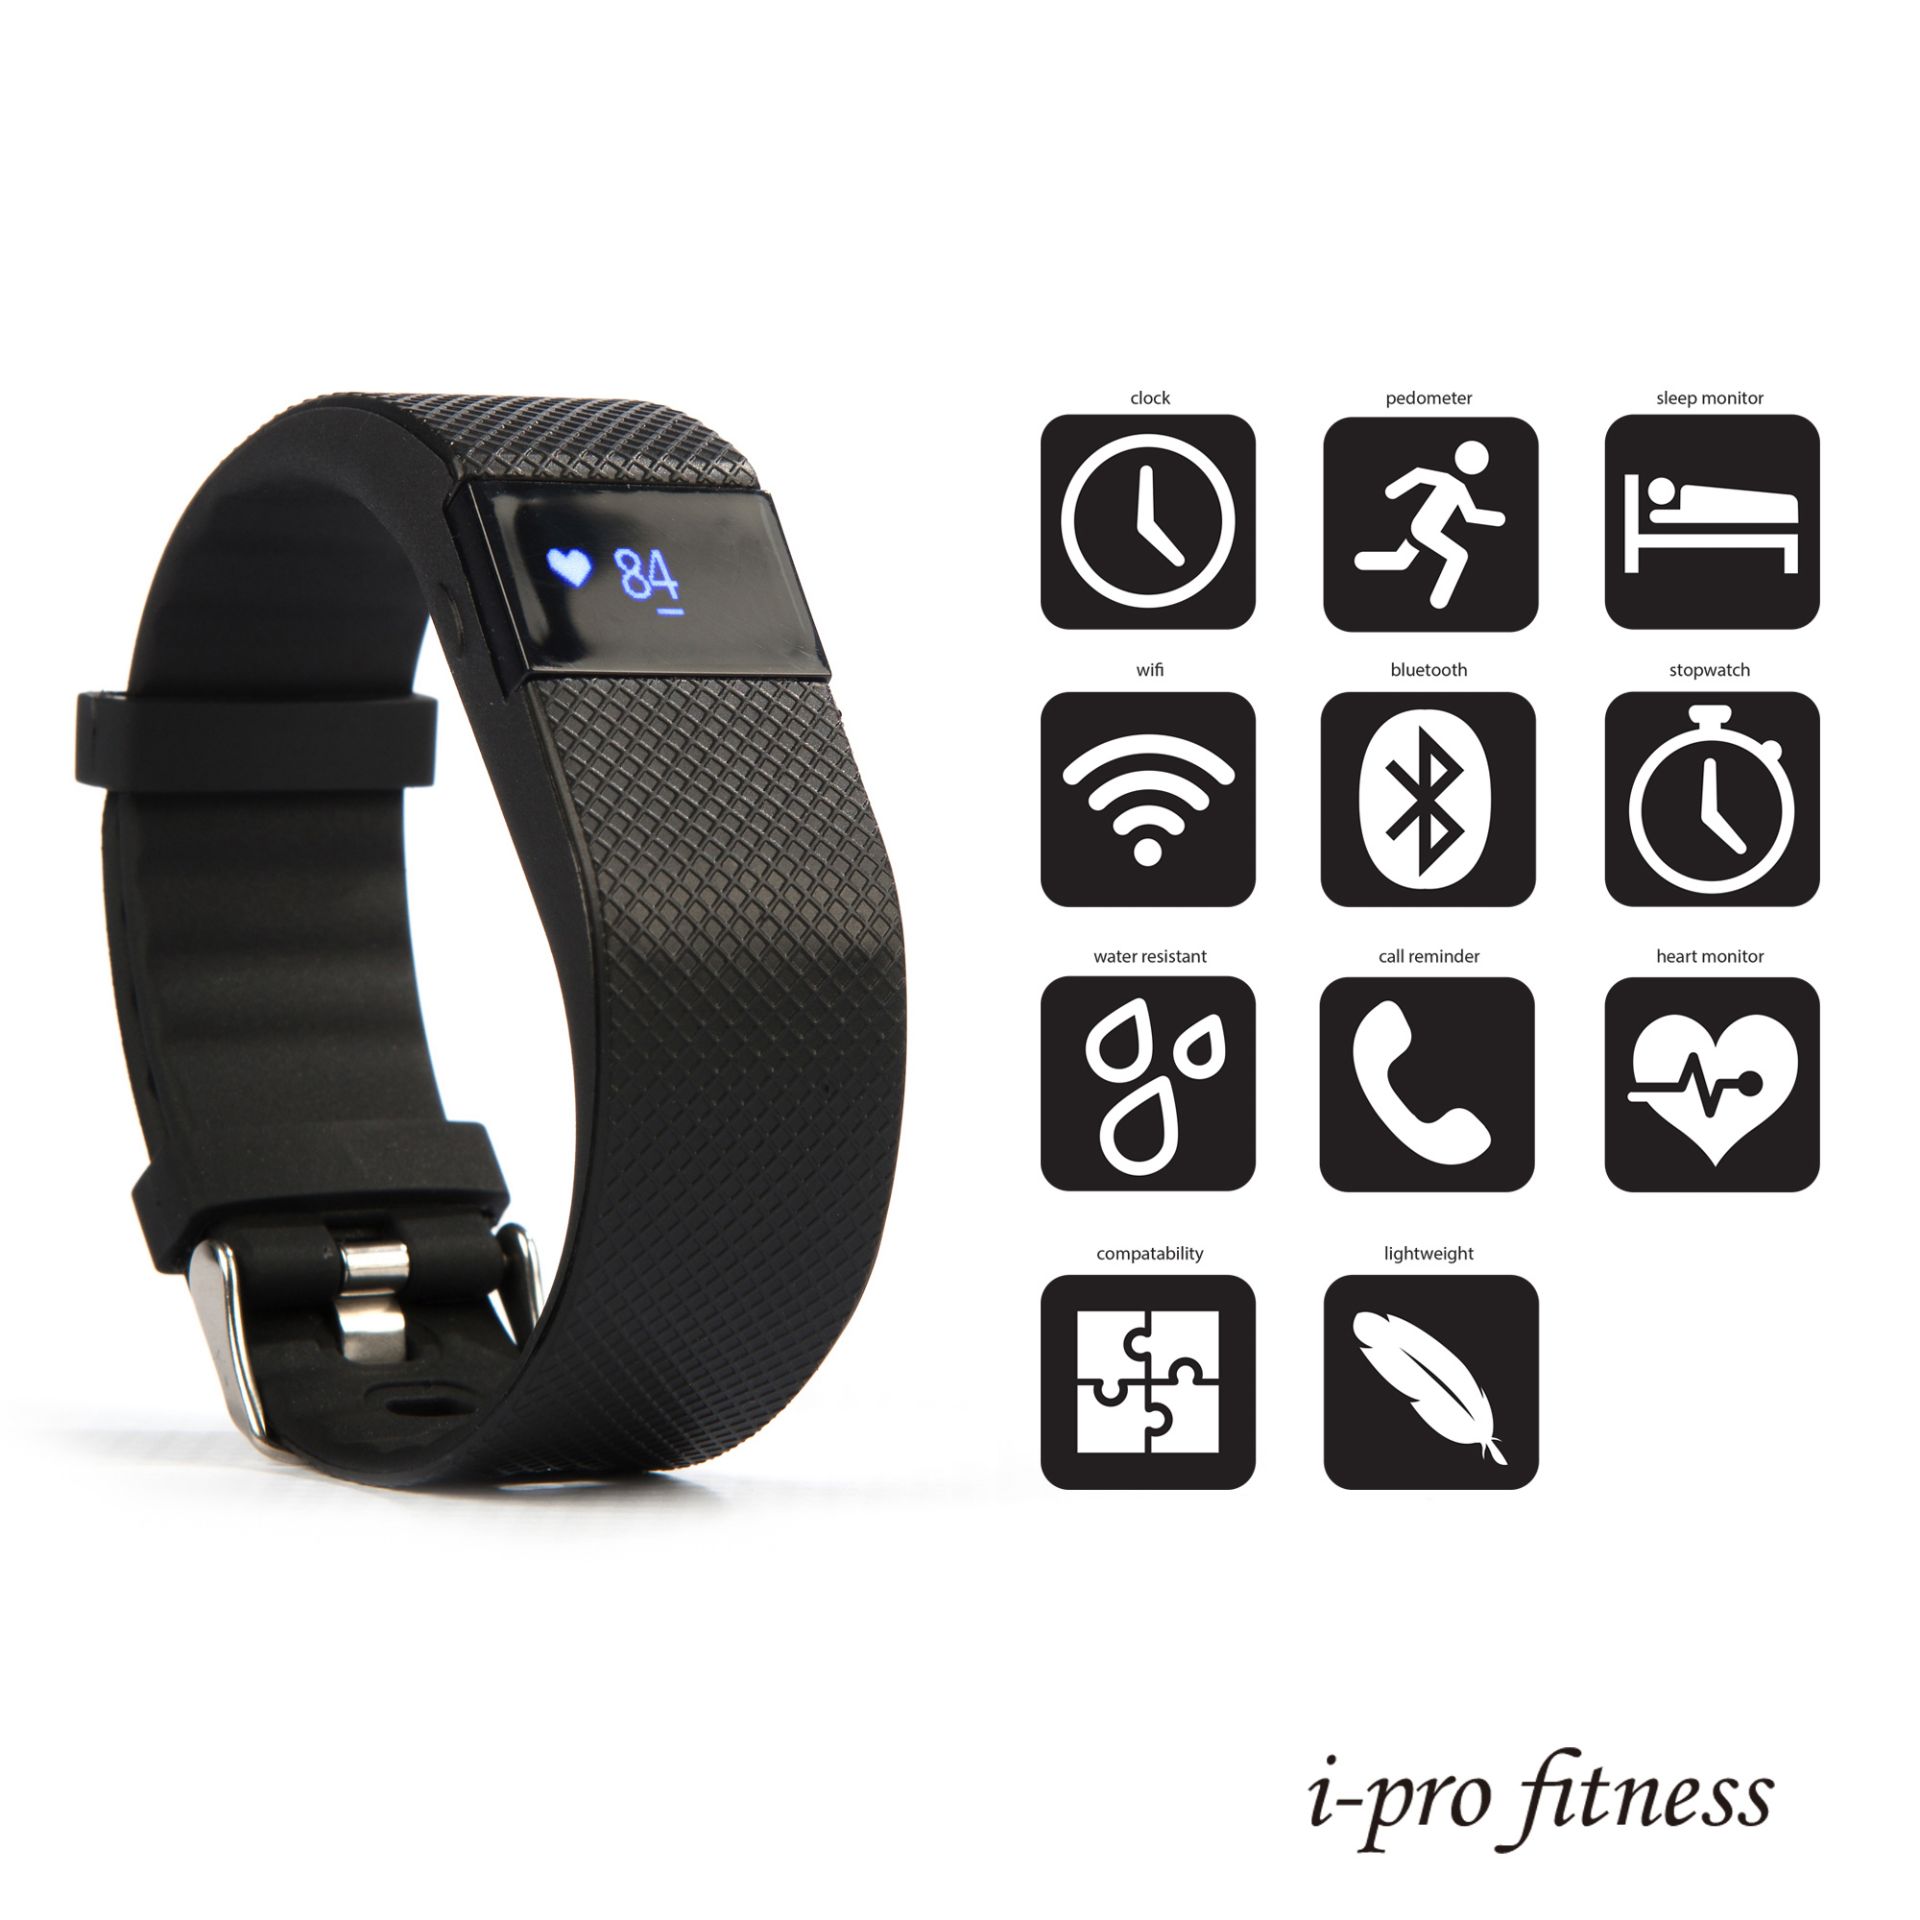 20x Fitness Tracker i-pro fitness, Bluetooth 4.0 Sports Smart Bracelet. - Image 6 of 8